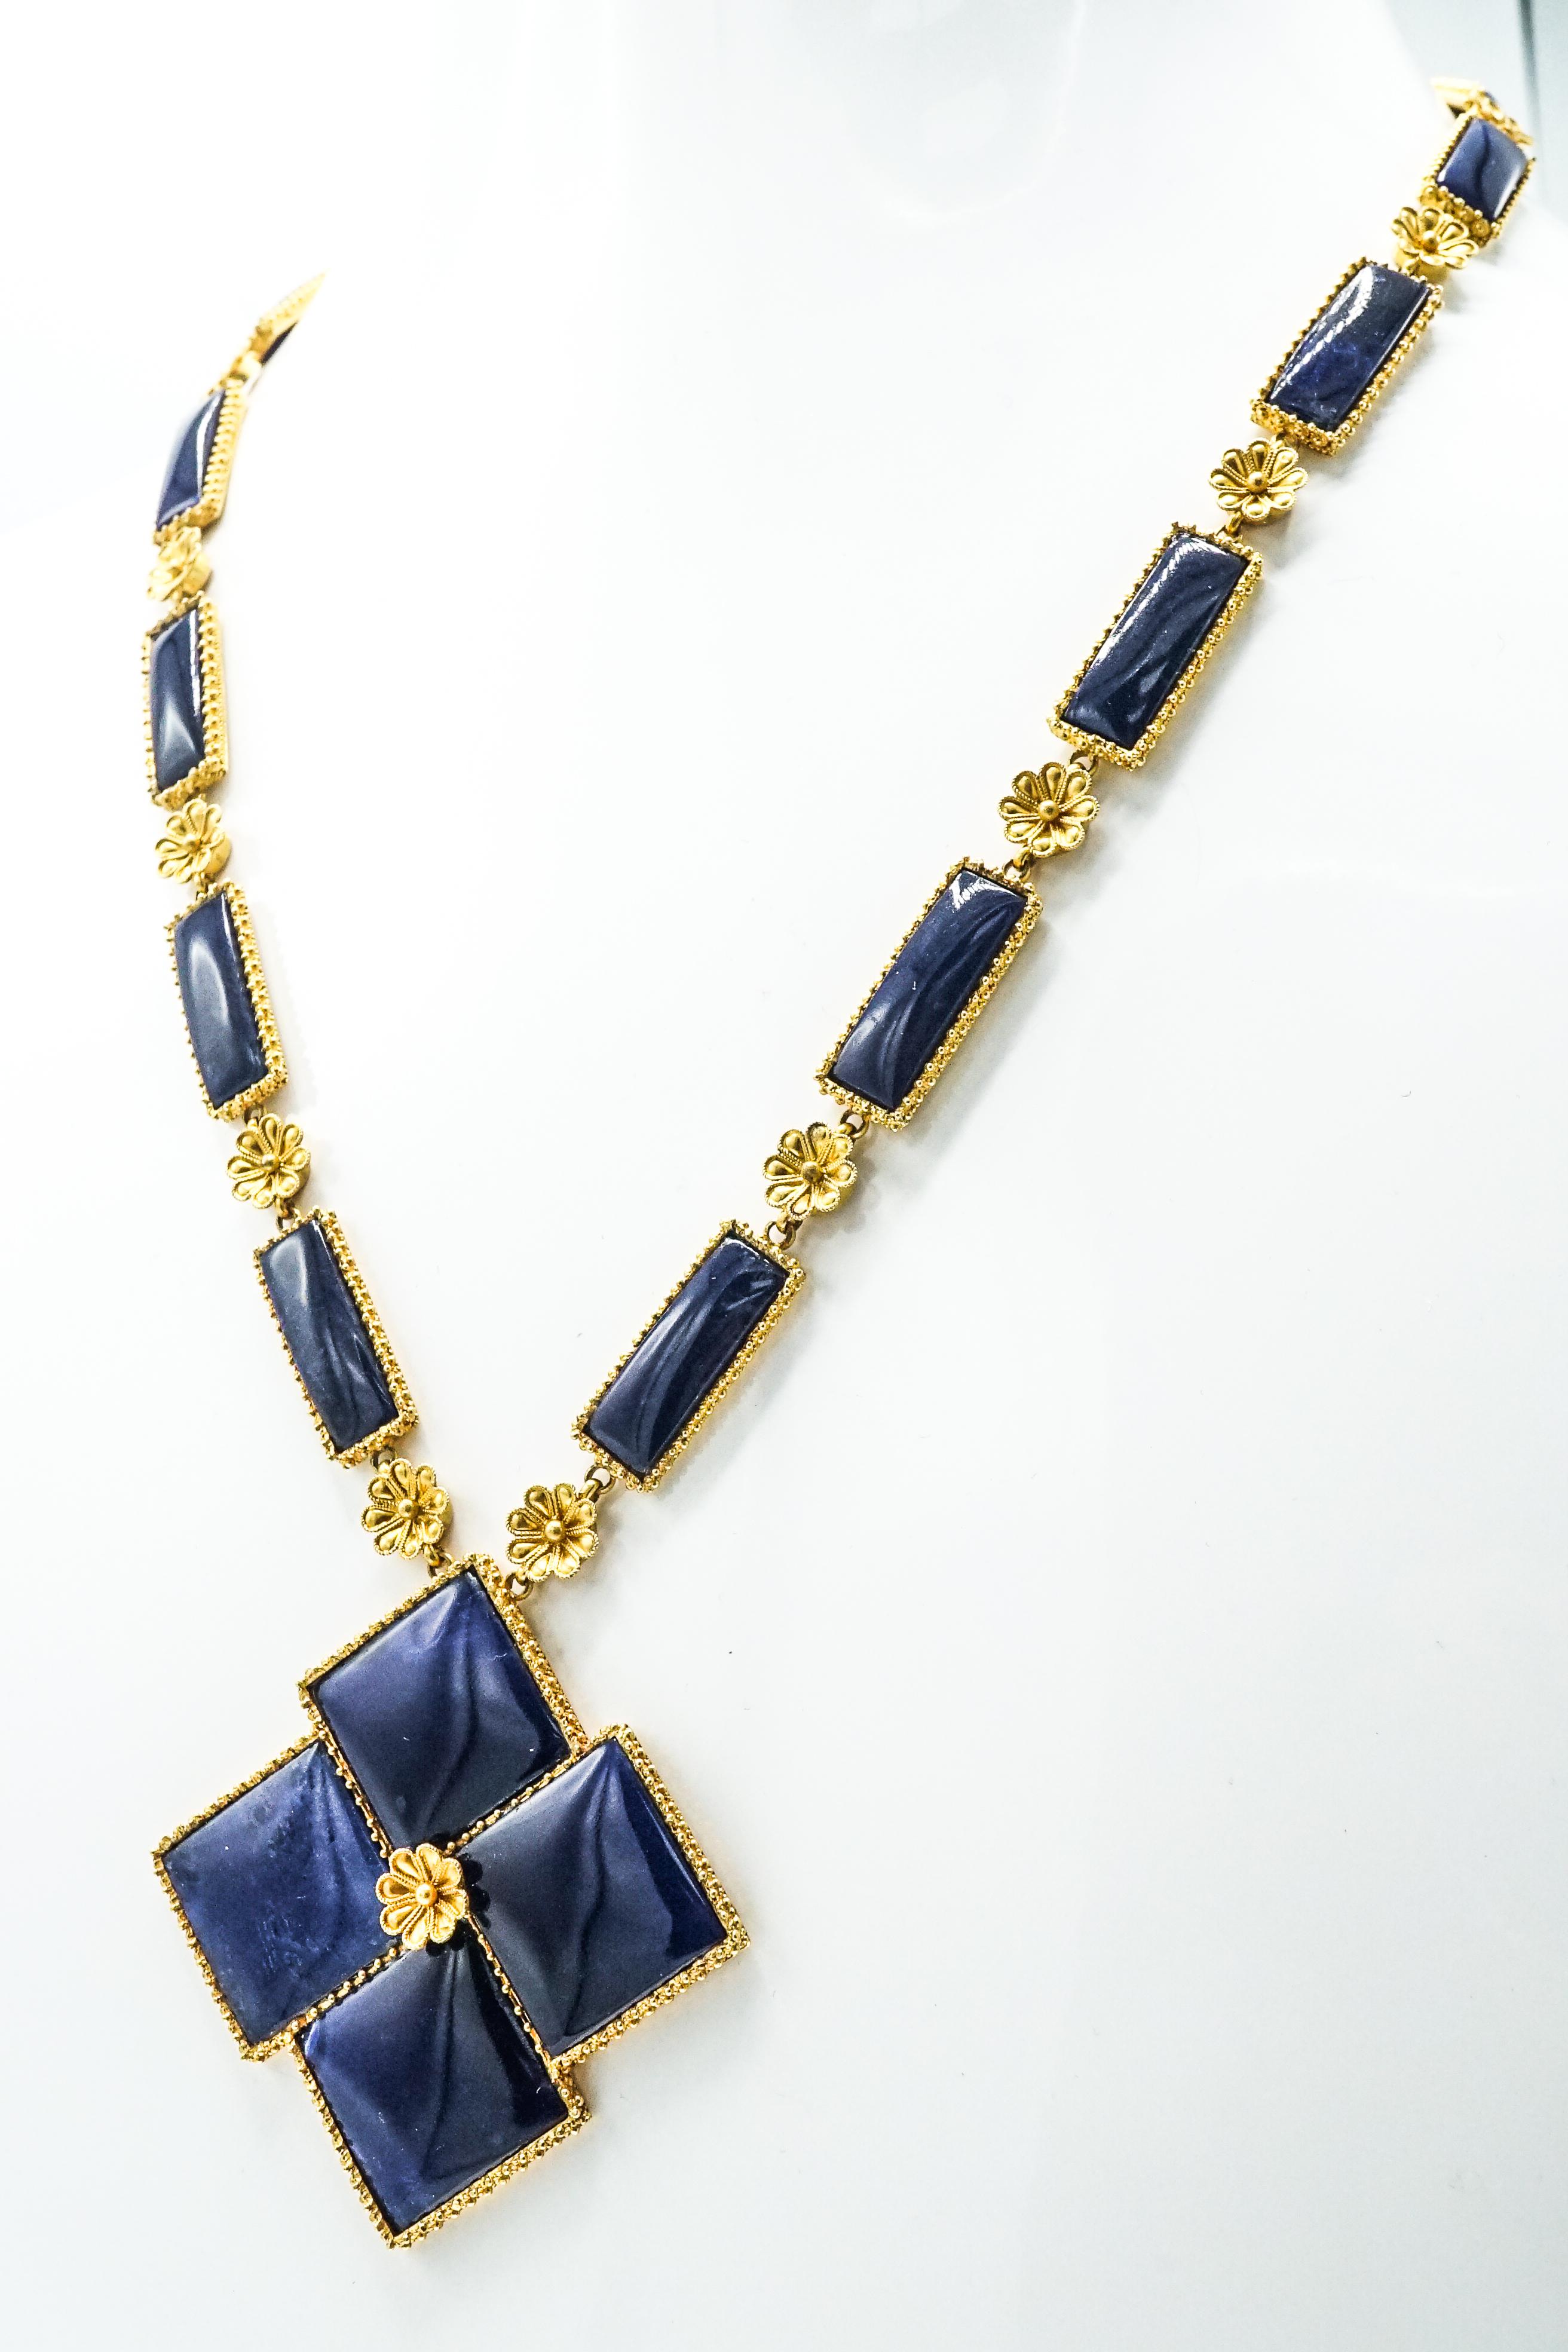 Llias Lalounis 22 Karat Gold and Sodalite Pendant-Necklace For Sale 1